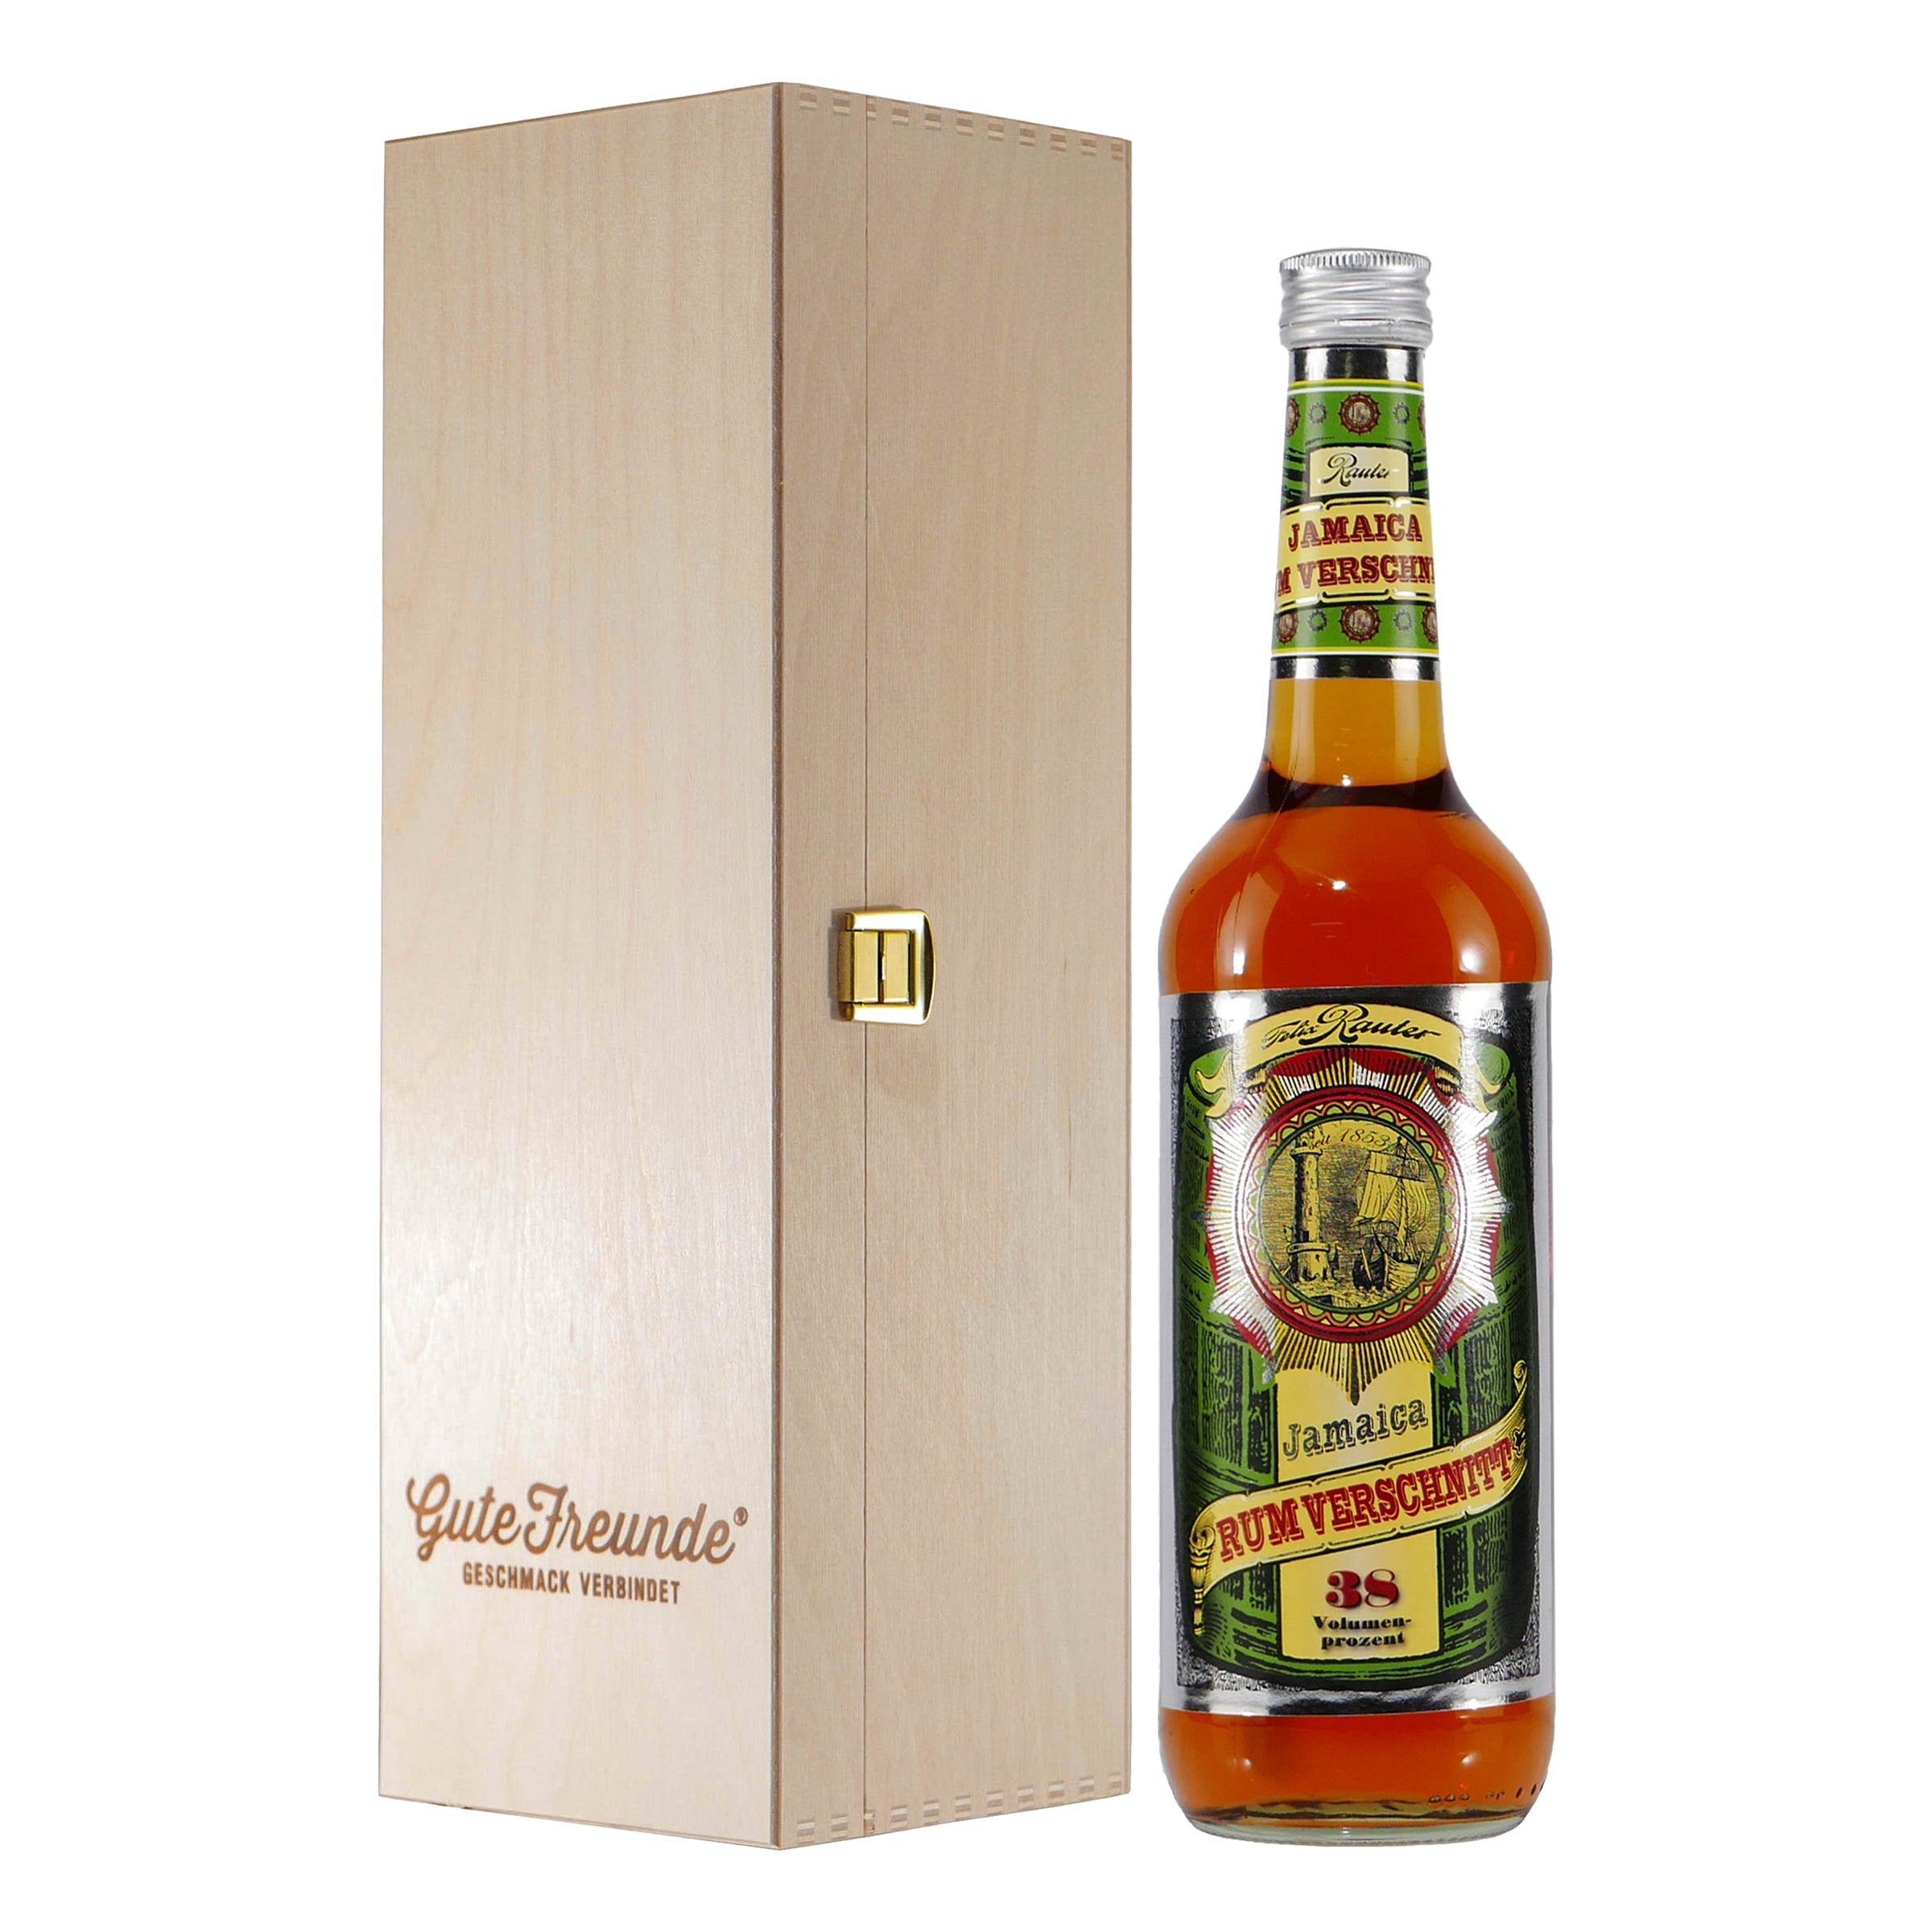 Rauter Jamaica Rum Verschnitt 0,7L mit Geschenk-HK